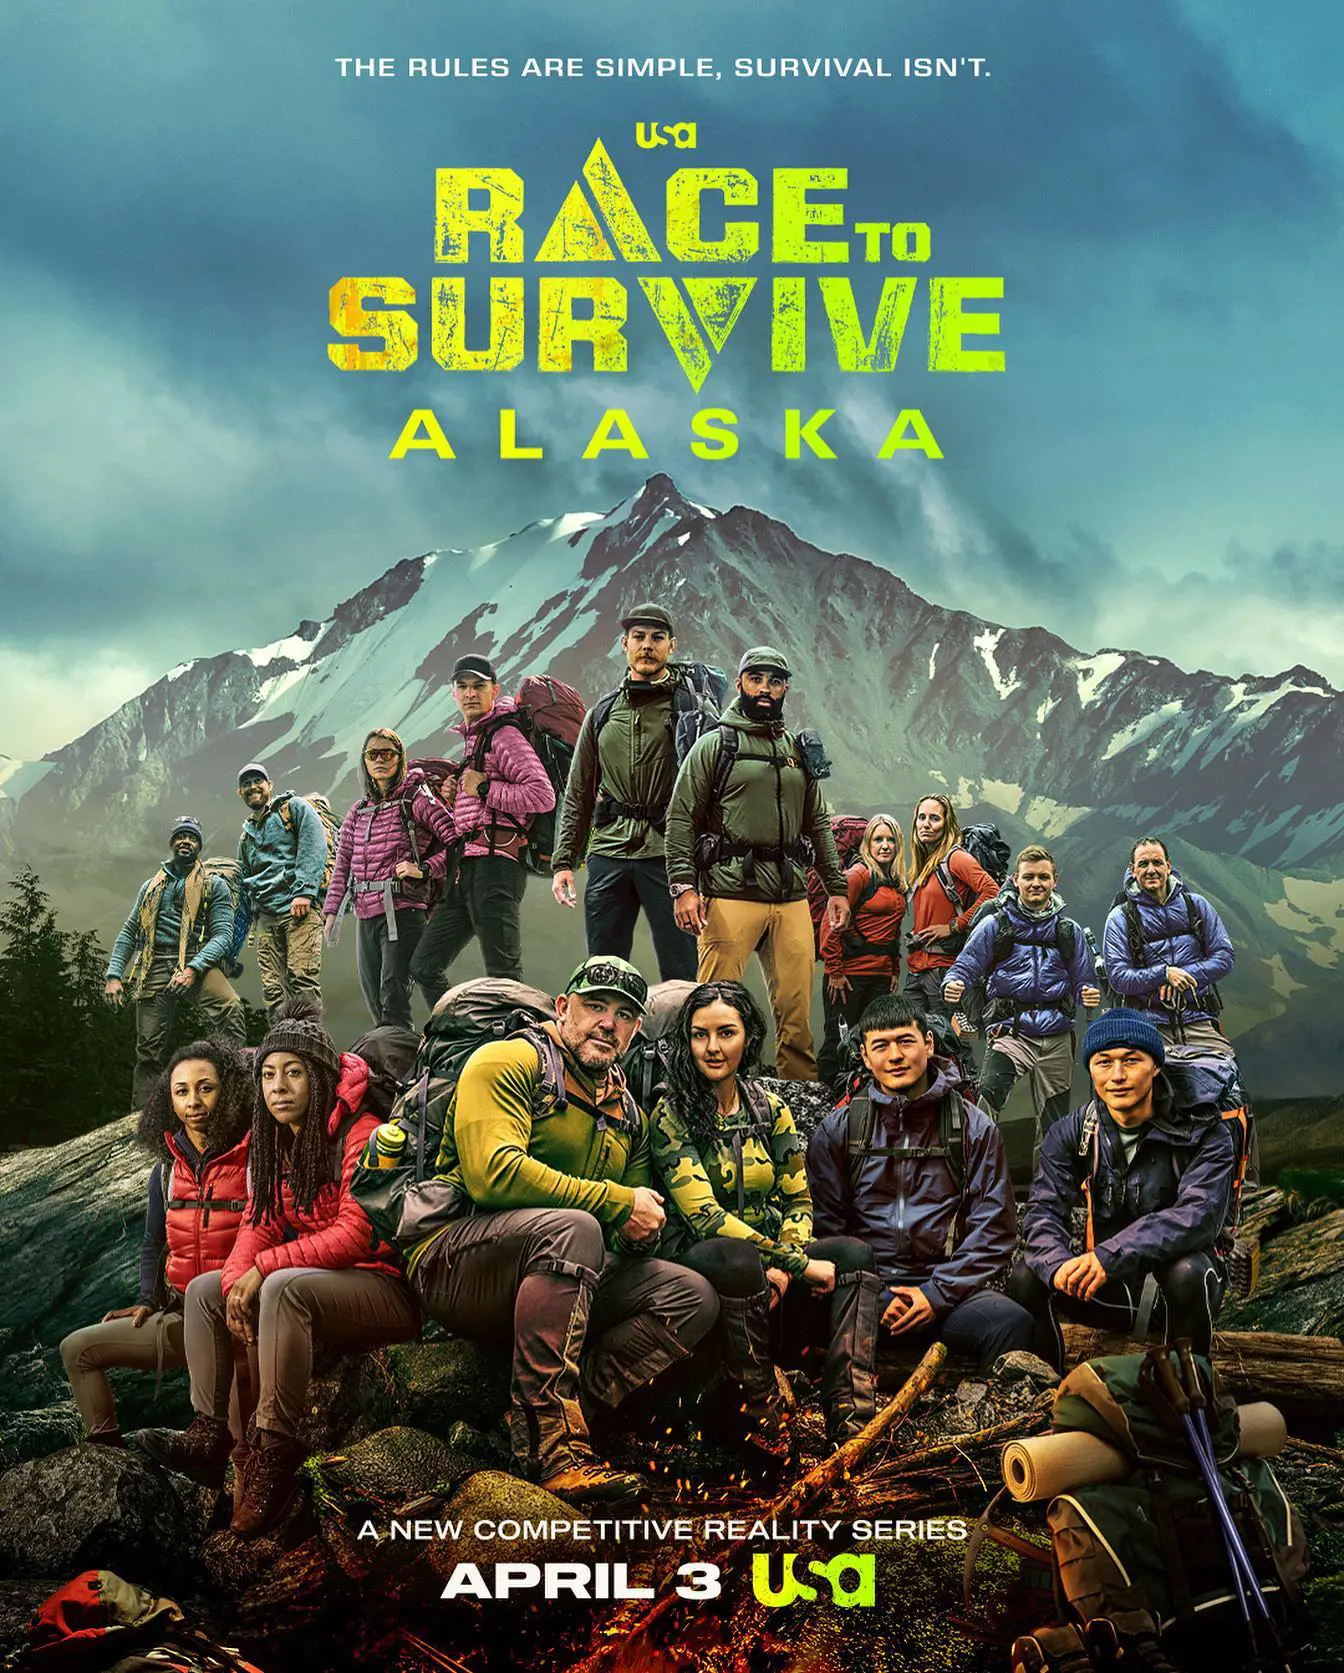 Race to survice Alaska was premiered on April 3, 2023